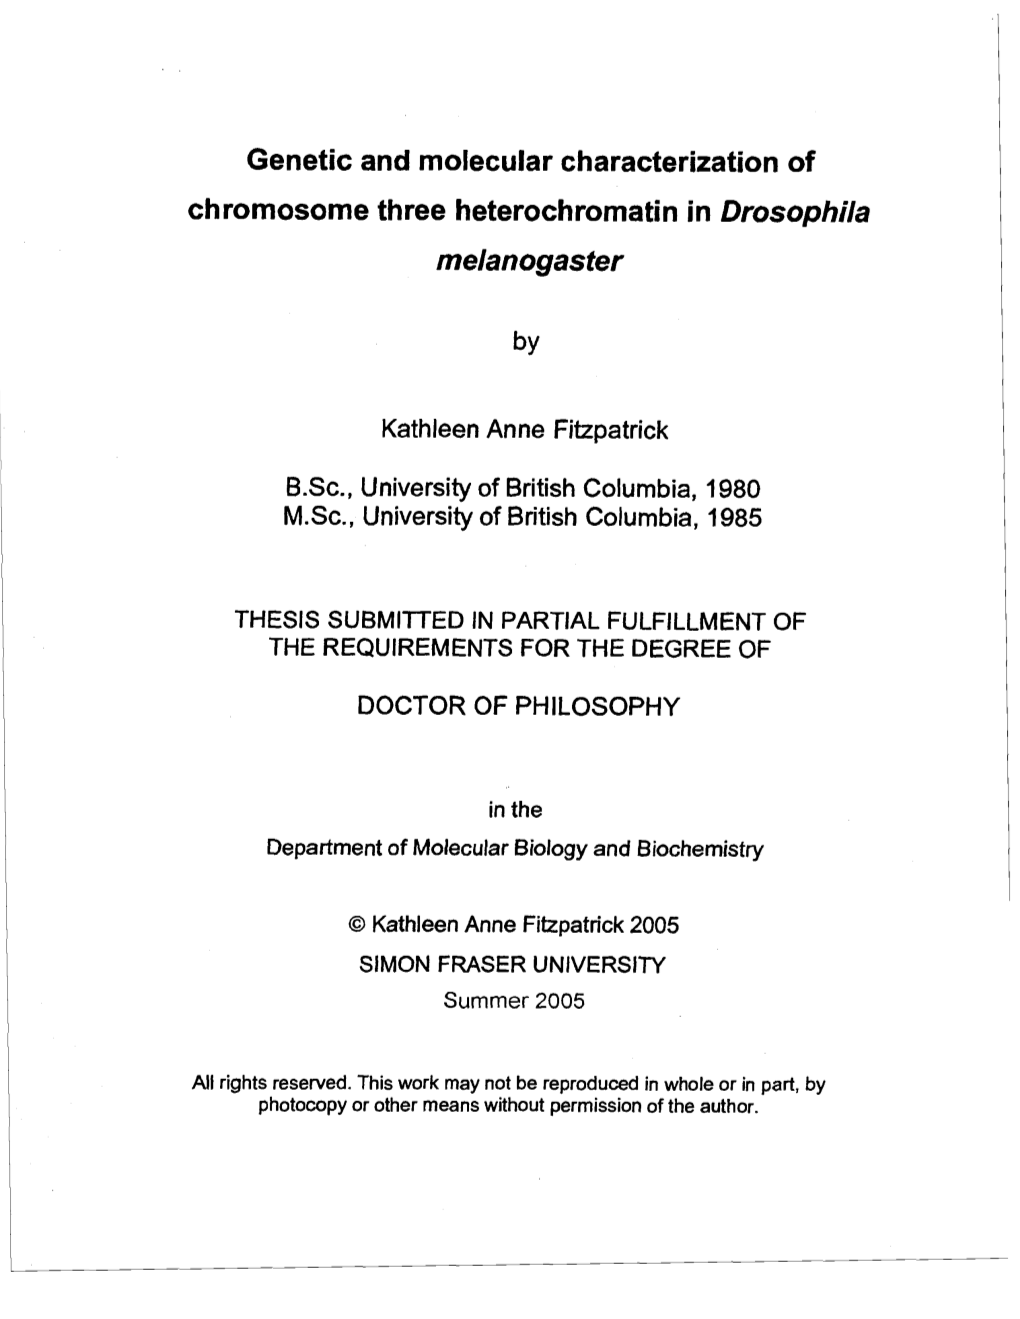 Genetic and Molecular Characterization of Chromosome Three Heterochromatin in Drosophila Melanogaster